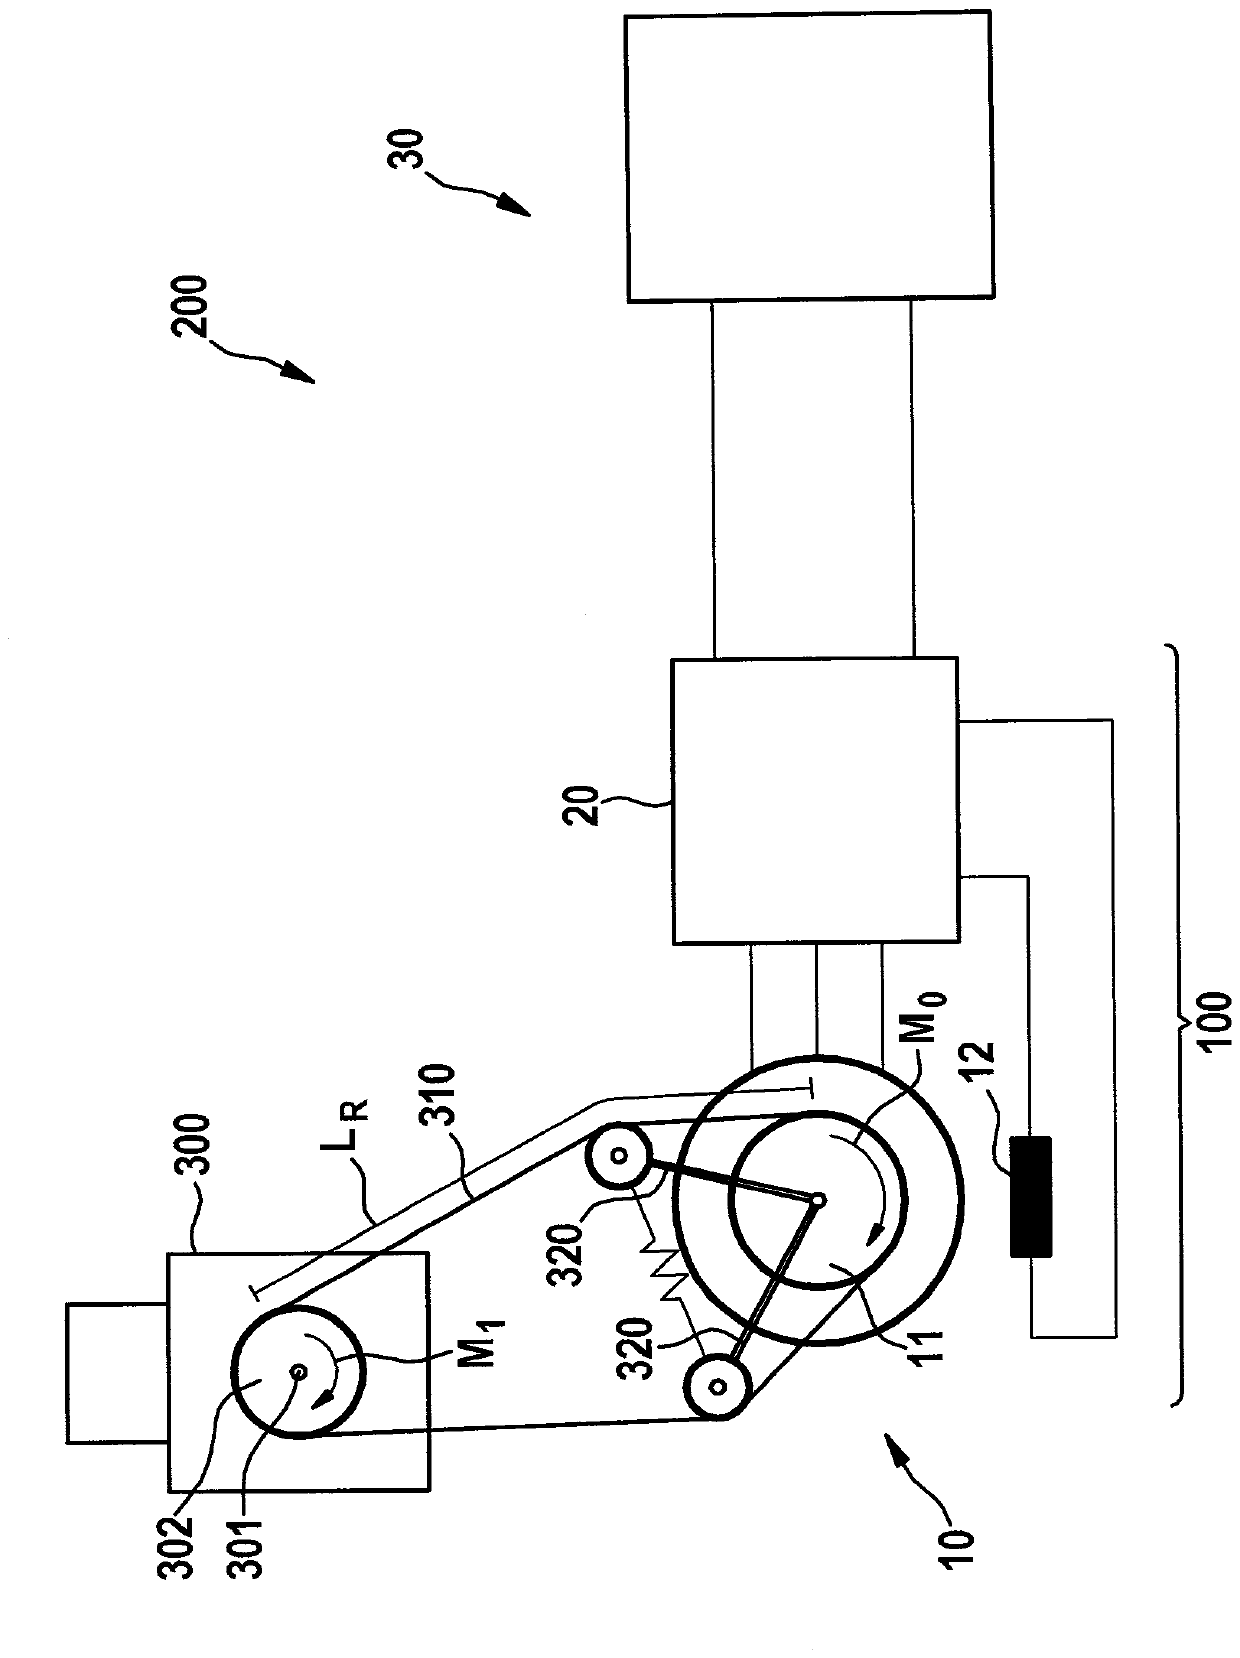 Method for starting an internal combustion engine via a belt-driven starter generator